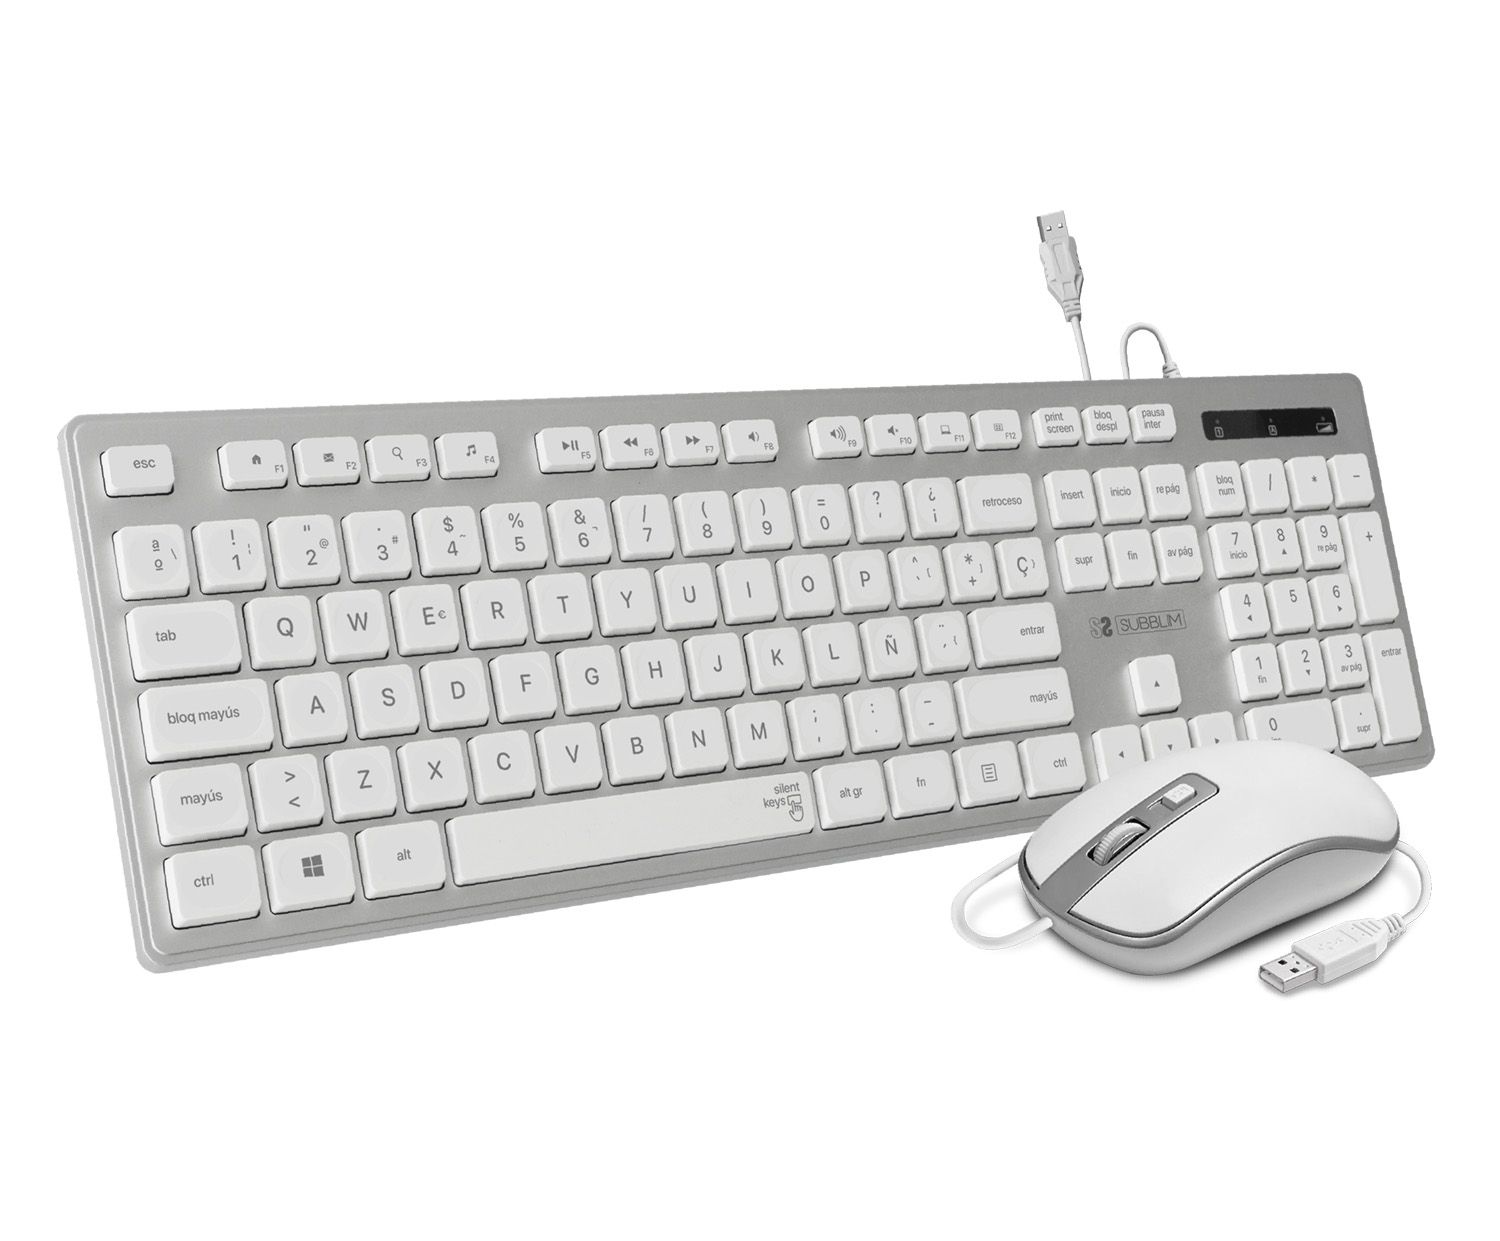 Teclado Ergonómico y ratón con cable USB Plano Silencioso Plata/Blanco Ergo